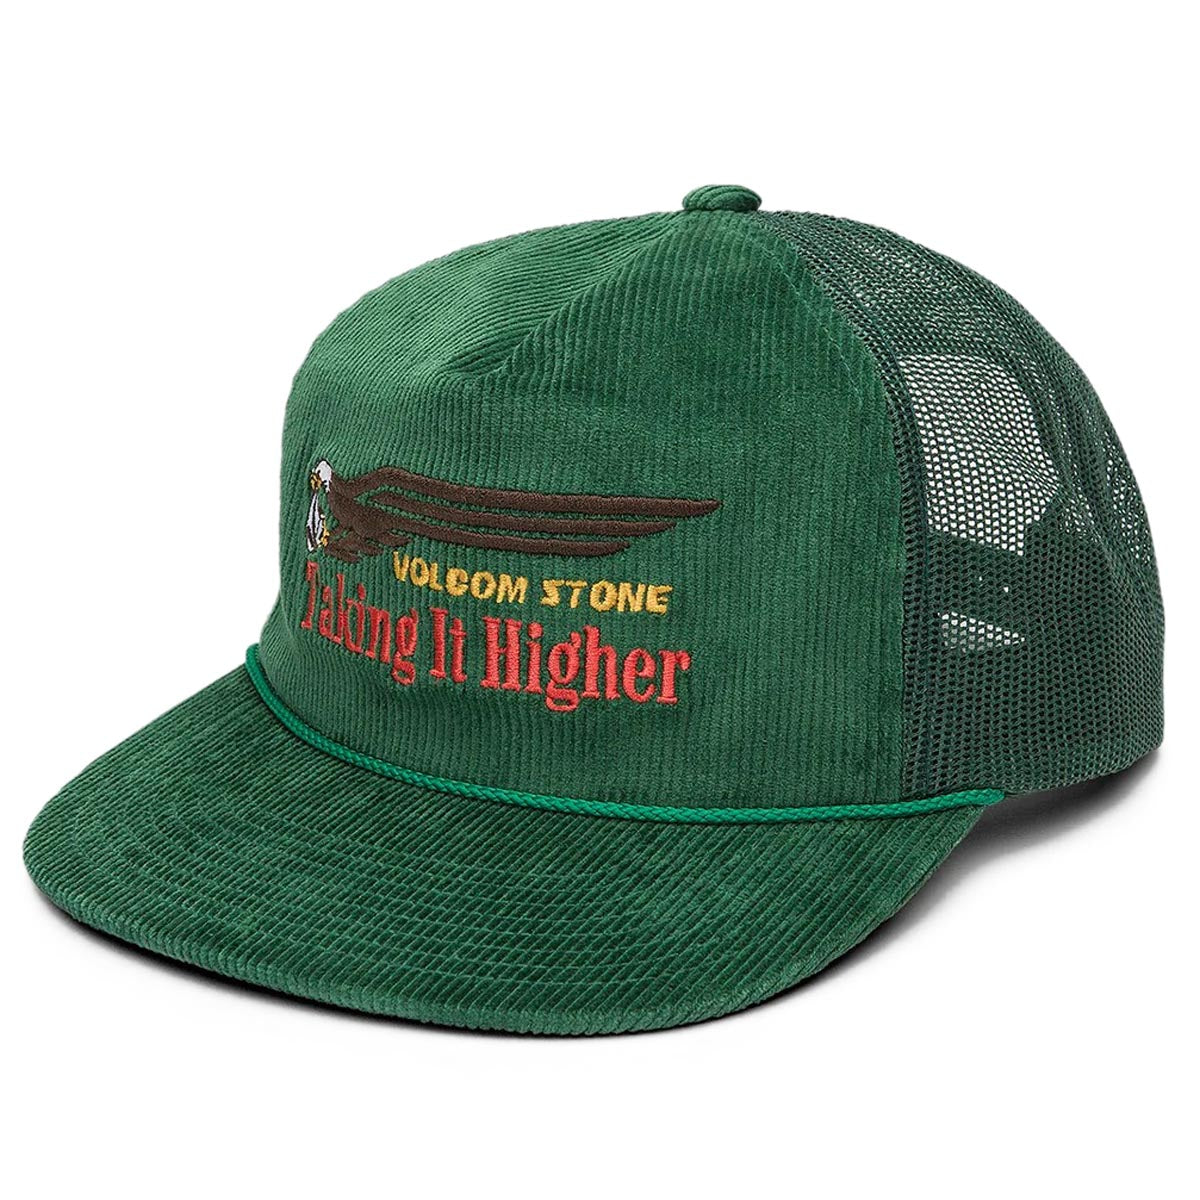 Volcom Take It Higher Trucker Hat - Fir Green image 1